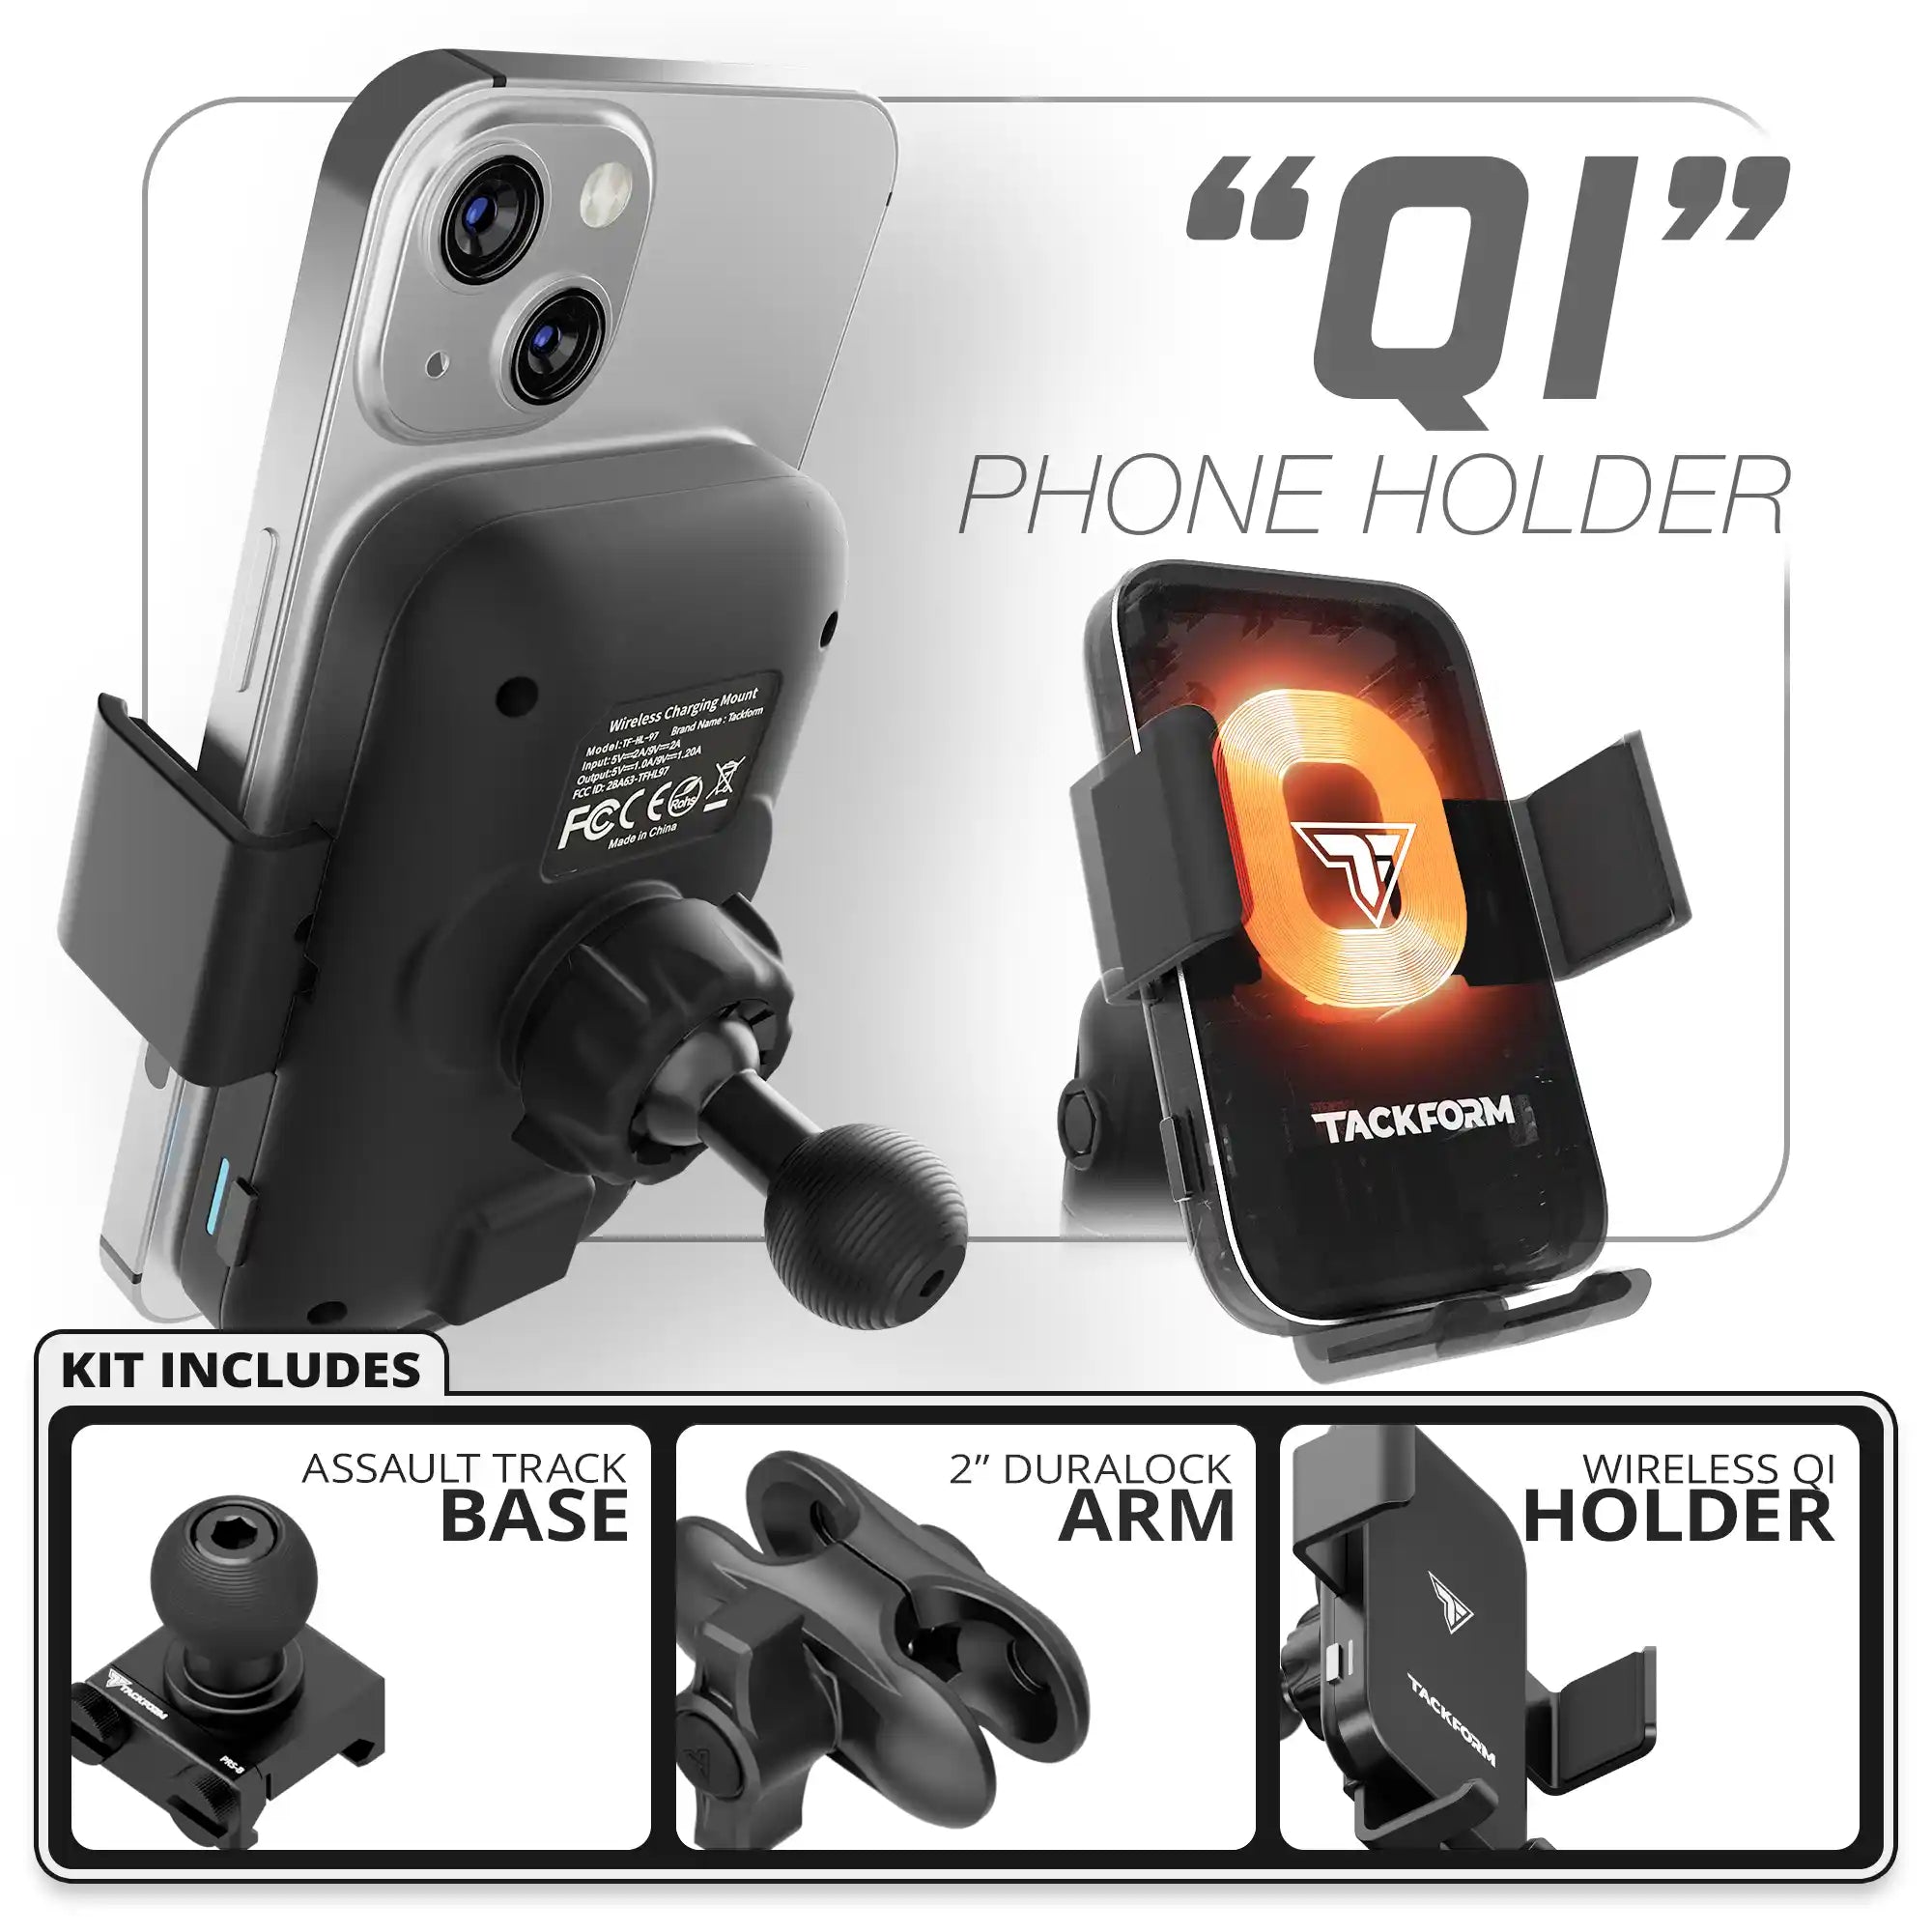 Wireless Charging Phone Holder | Assault Track Base | 2" DuraLock Arm